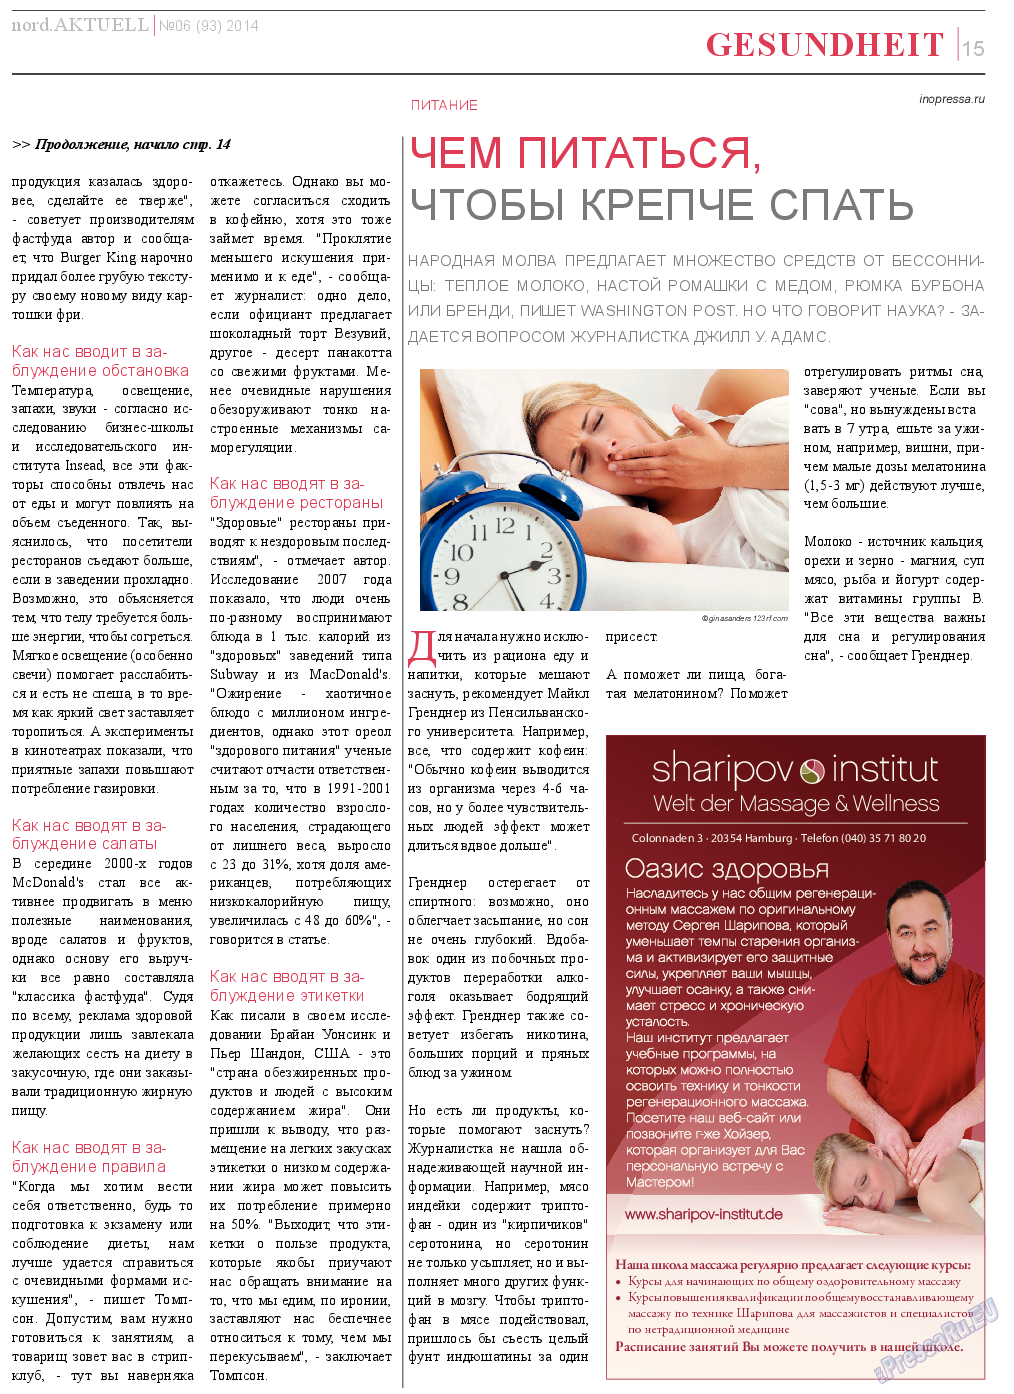 nord.Aktuell, газета. 2014 №6 стр.15